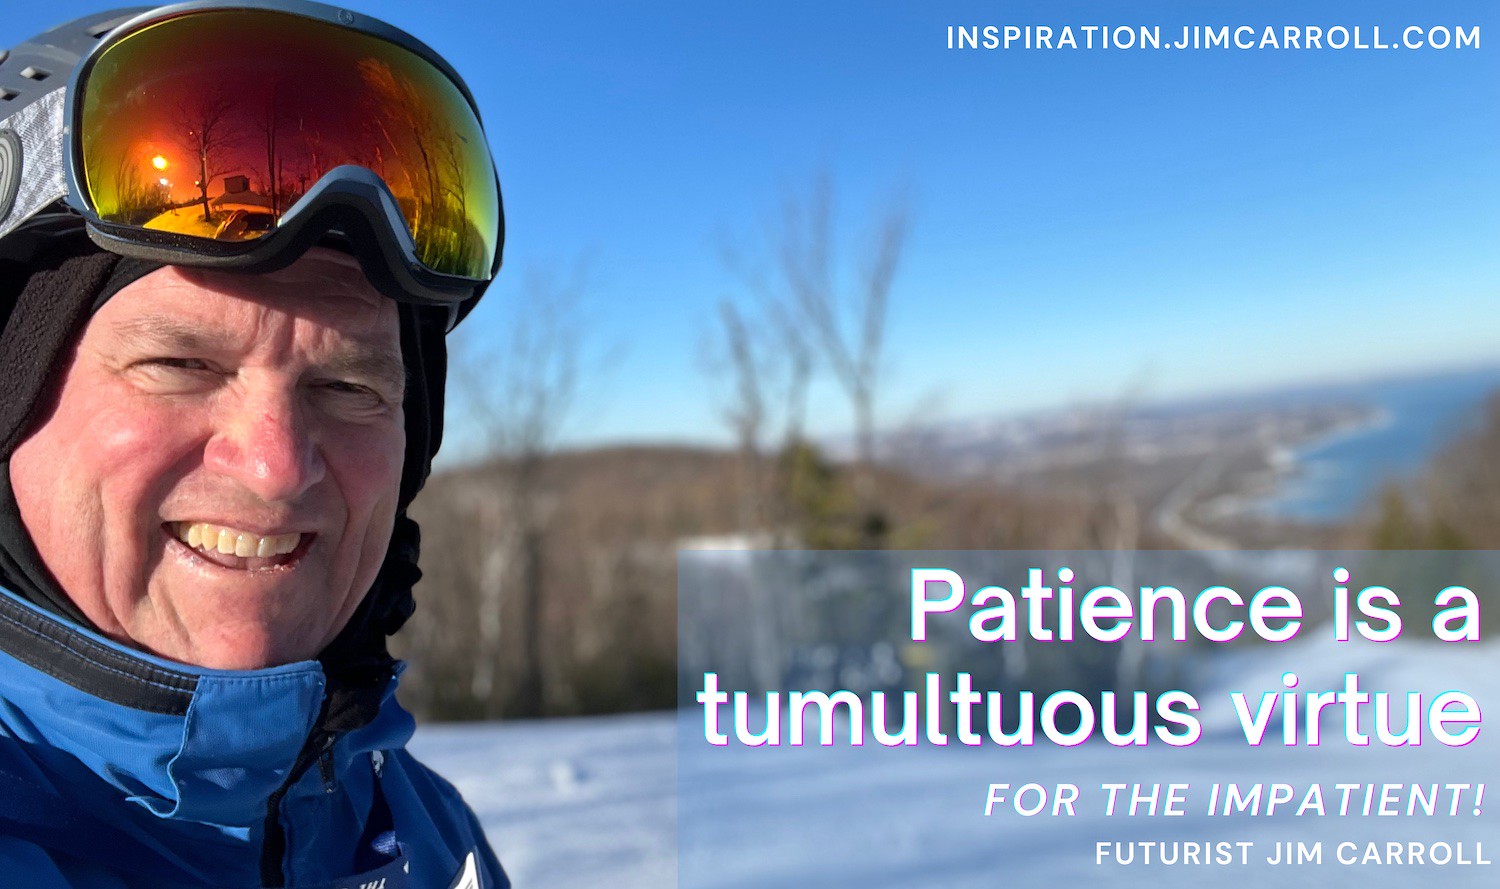 "Patience is a tumultuous virtue for the impatient!" - Futurist Jim Carroll